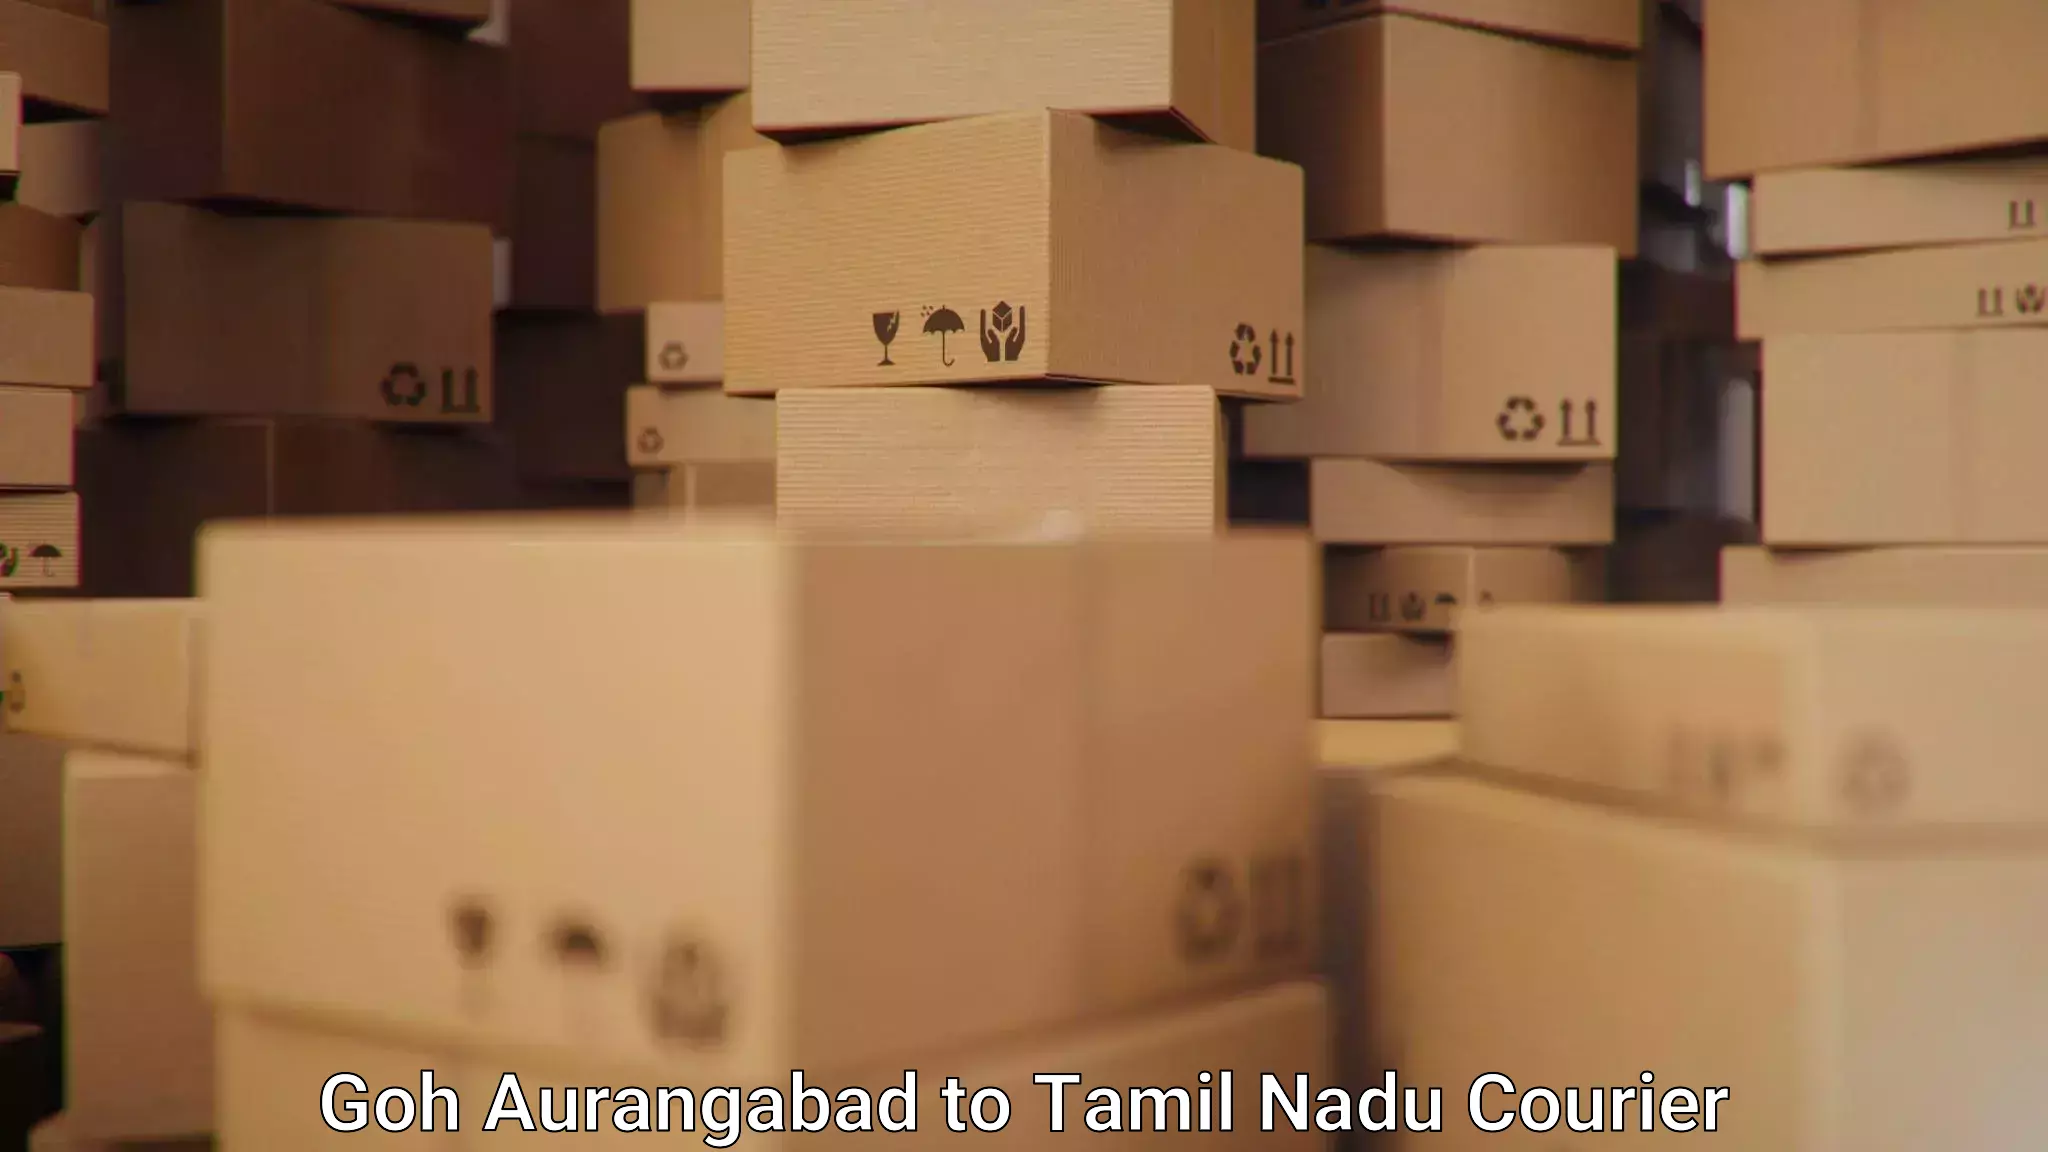 Courier service booking Goh Aurangabad to Tirupattur